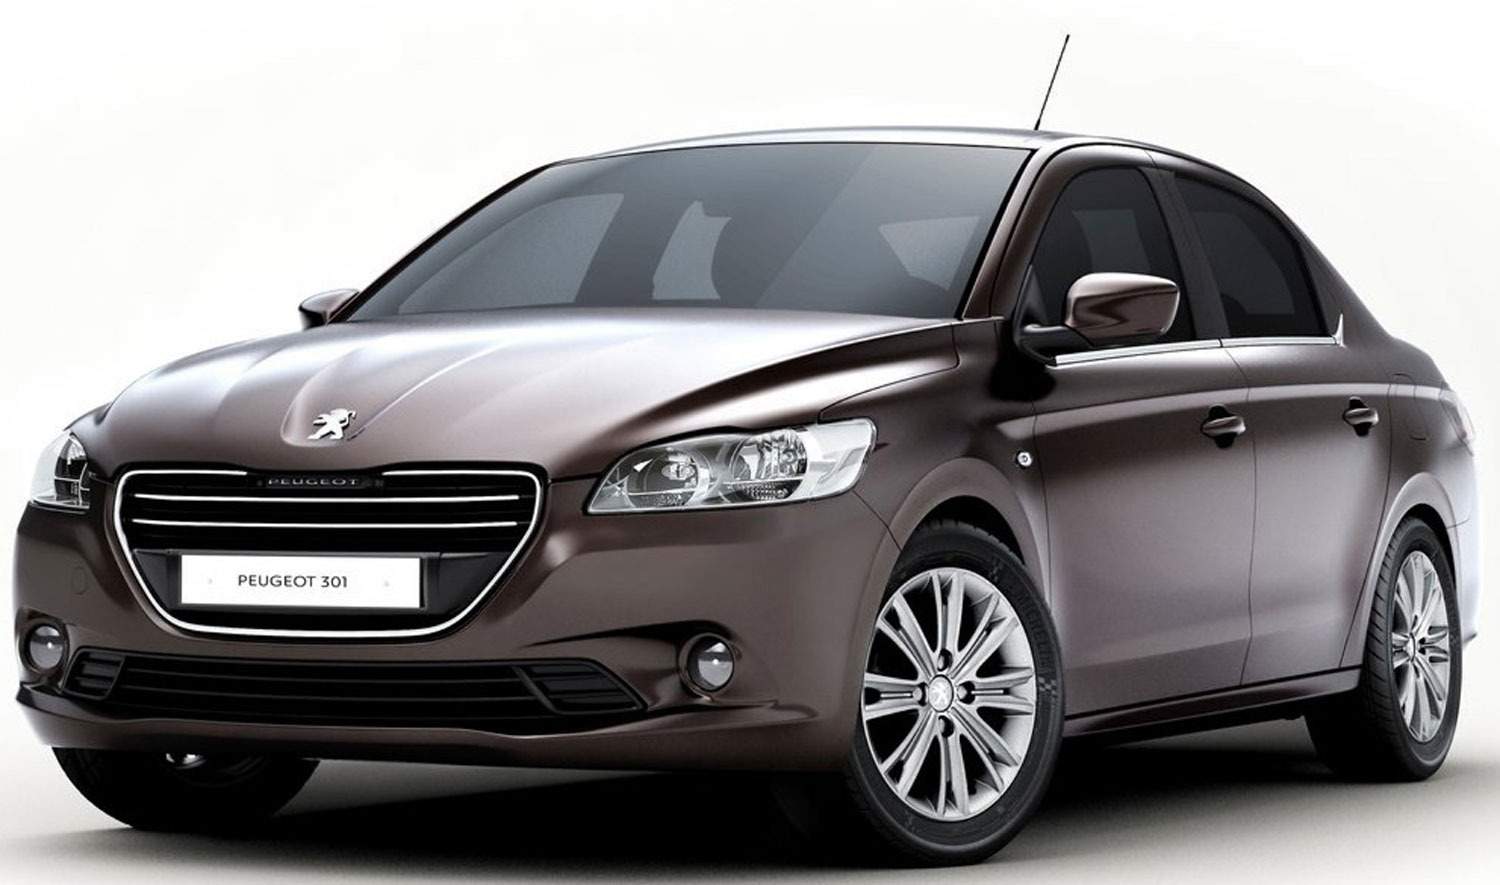 Peugeot Geebung Serv Auto Care Service